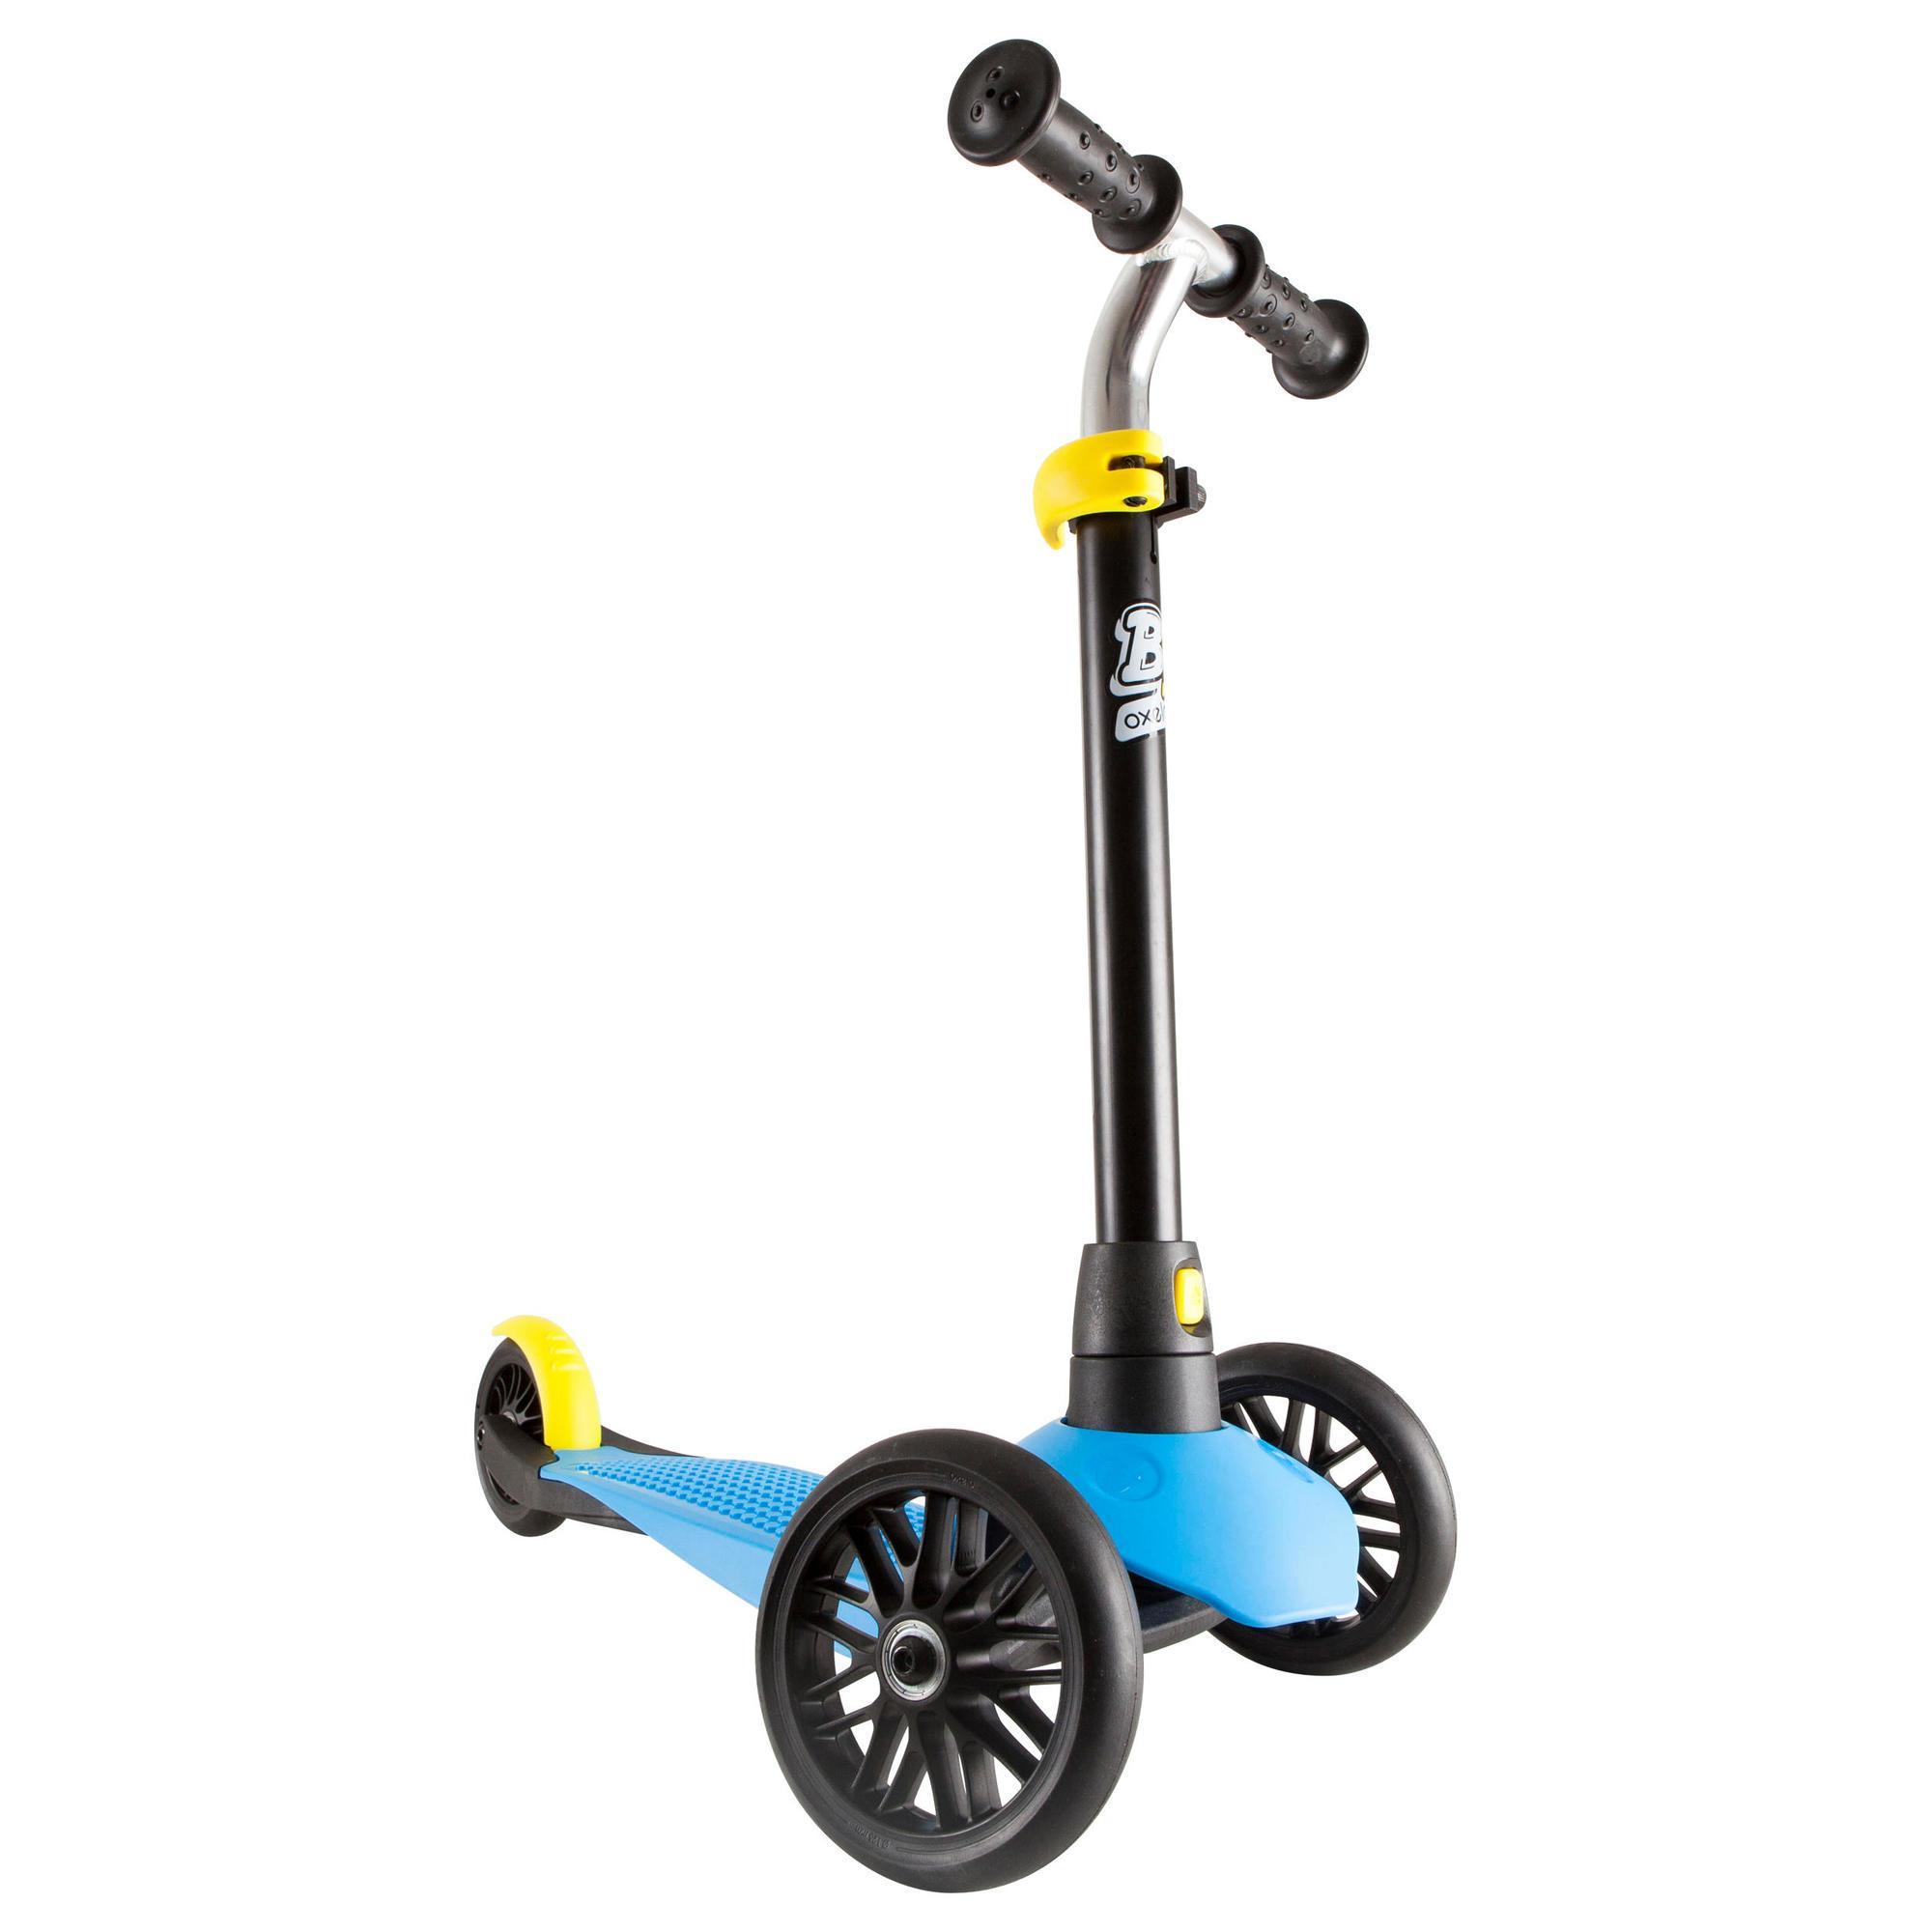 decathlon b1 scooter